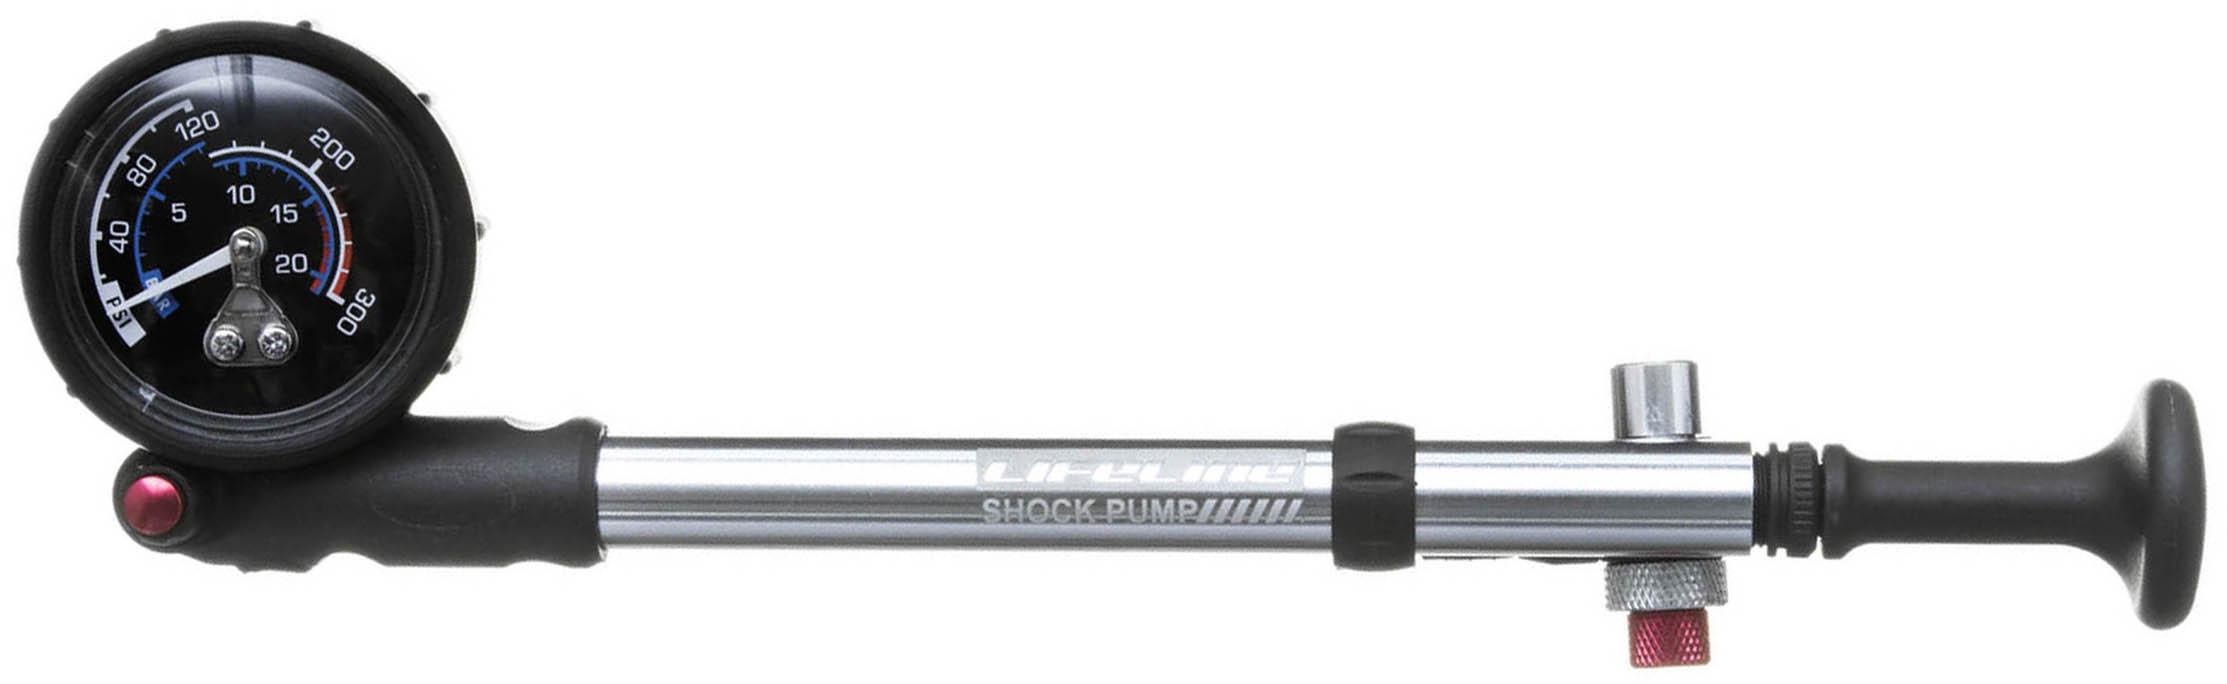 Lifeline Shock Pump - Black/grey